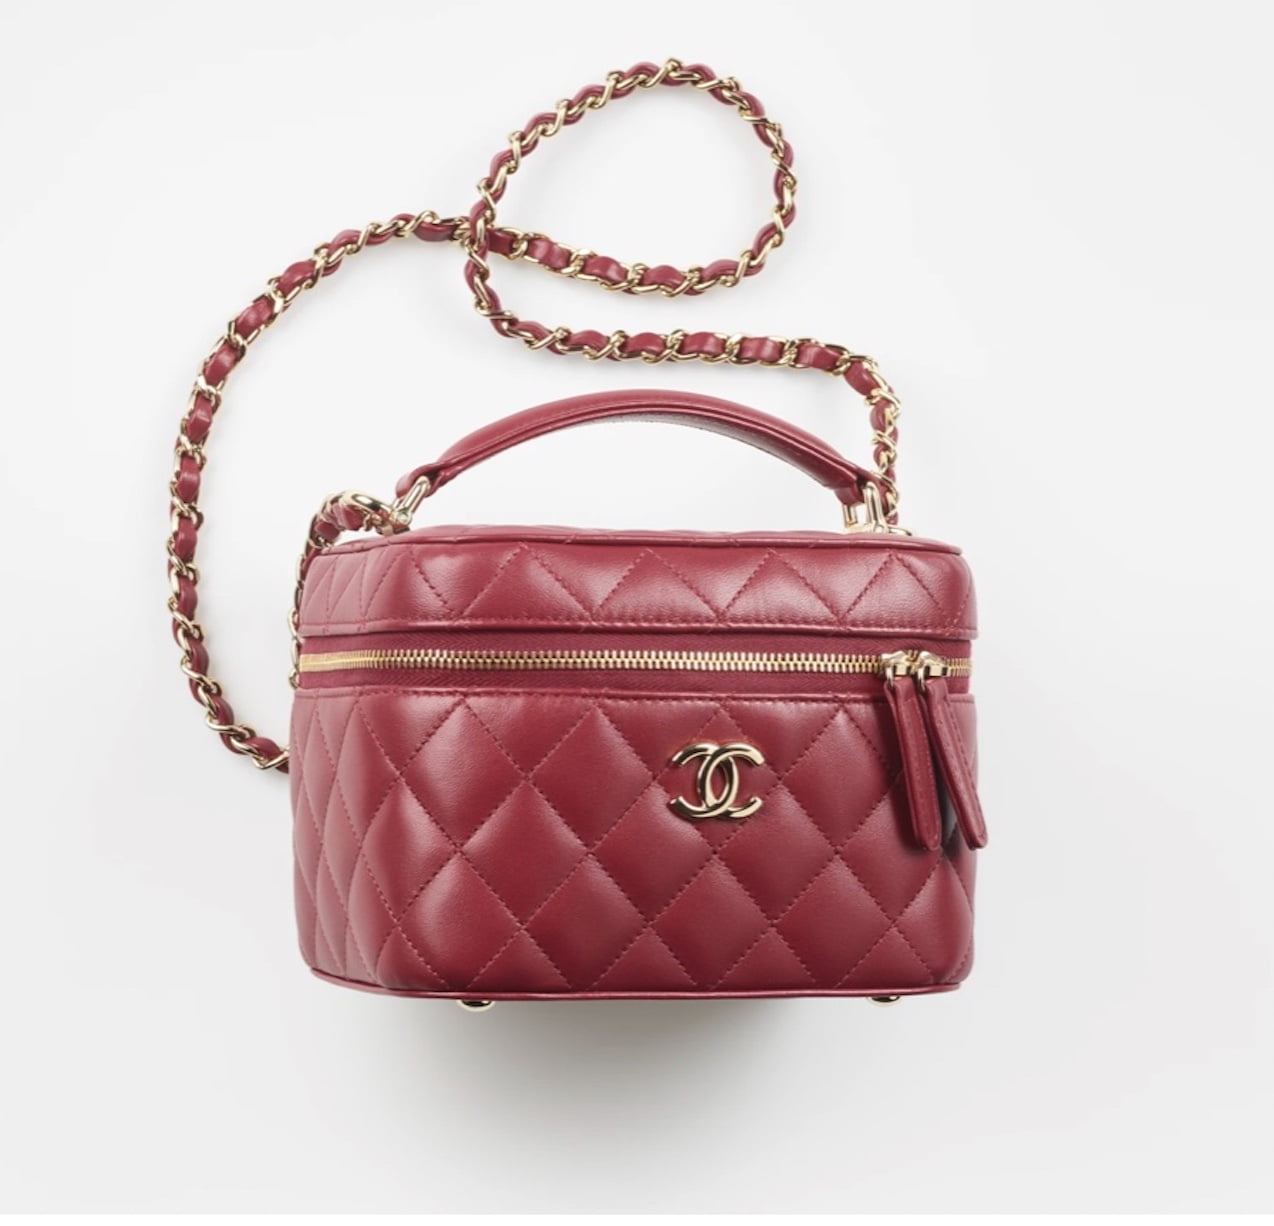 OMG, Chanel 22/23 Métiers d'art Bags are TDF - PurseBop